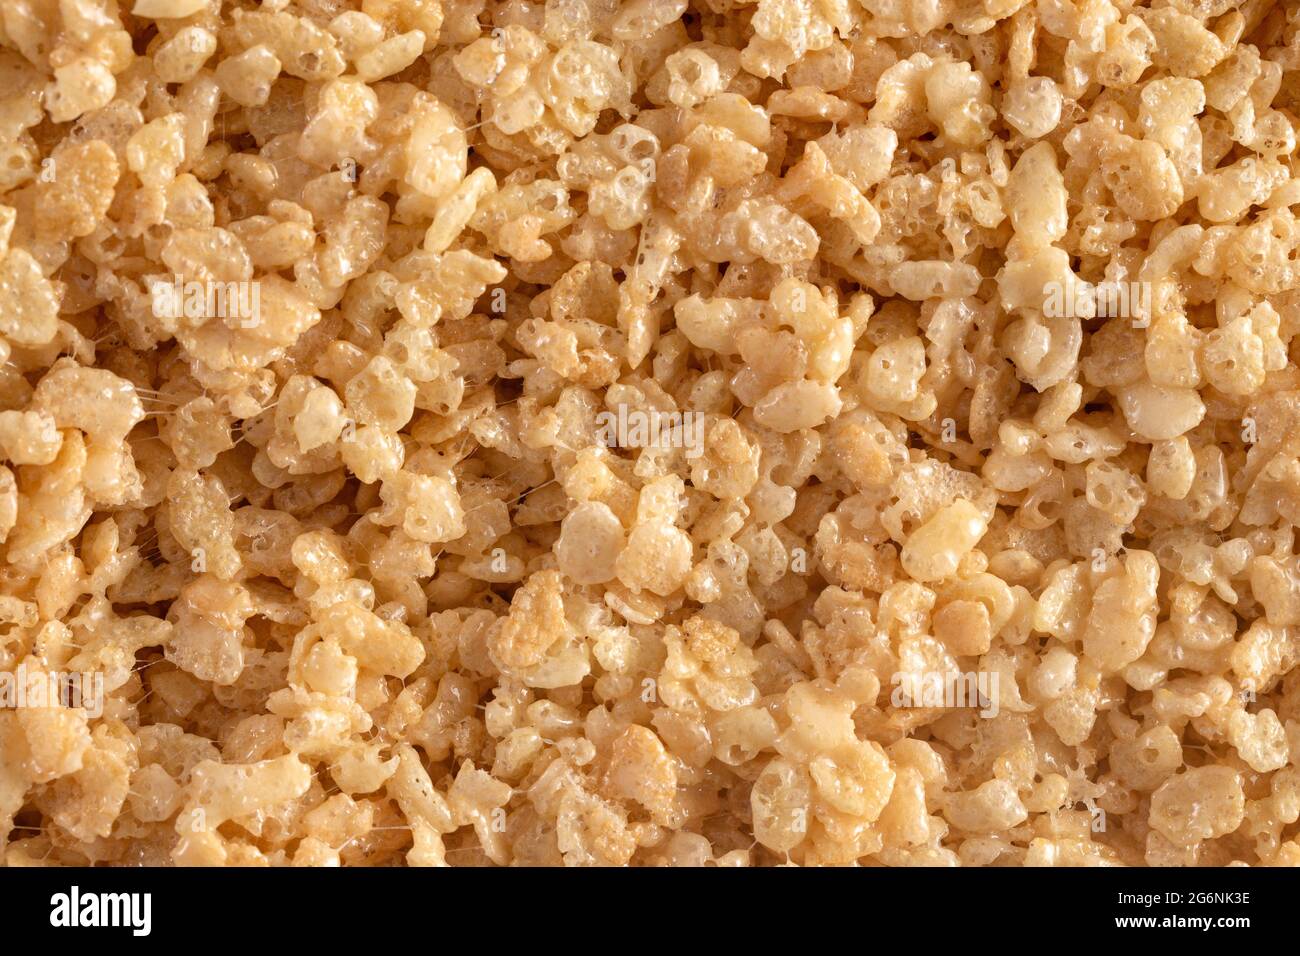 A Sheet of Uncut Marshmallow Crispy Rice Cereal Treat Bars Stock Photo